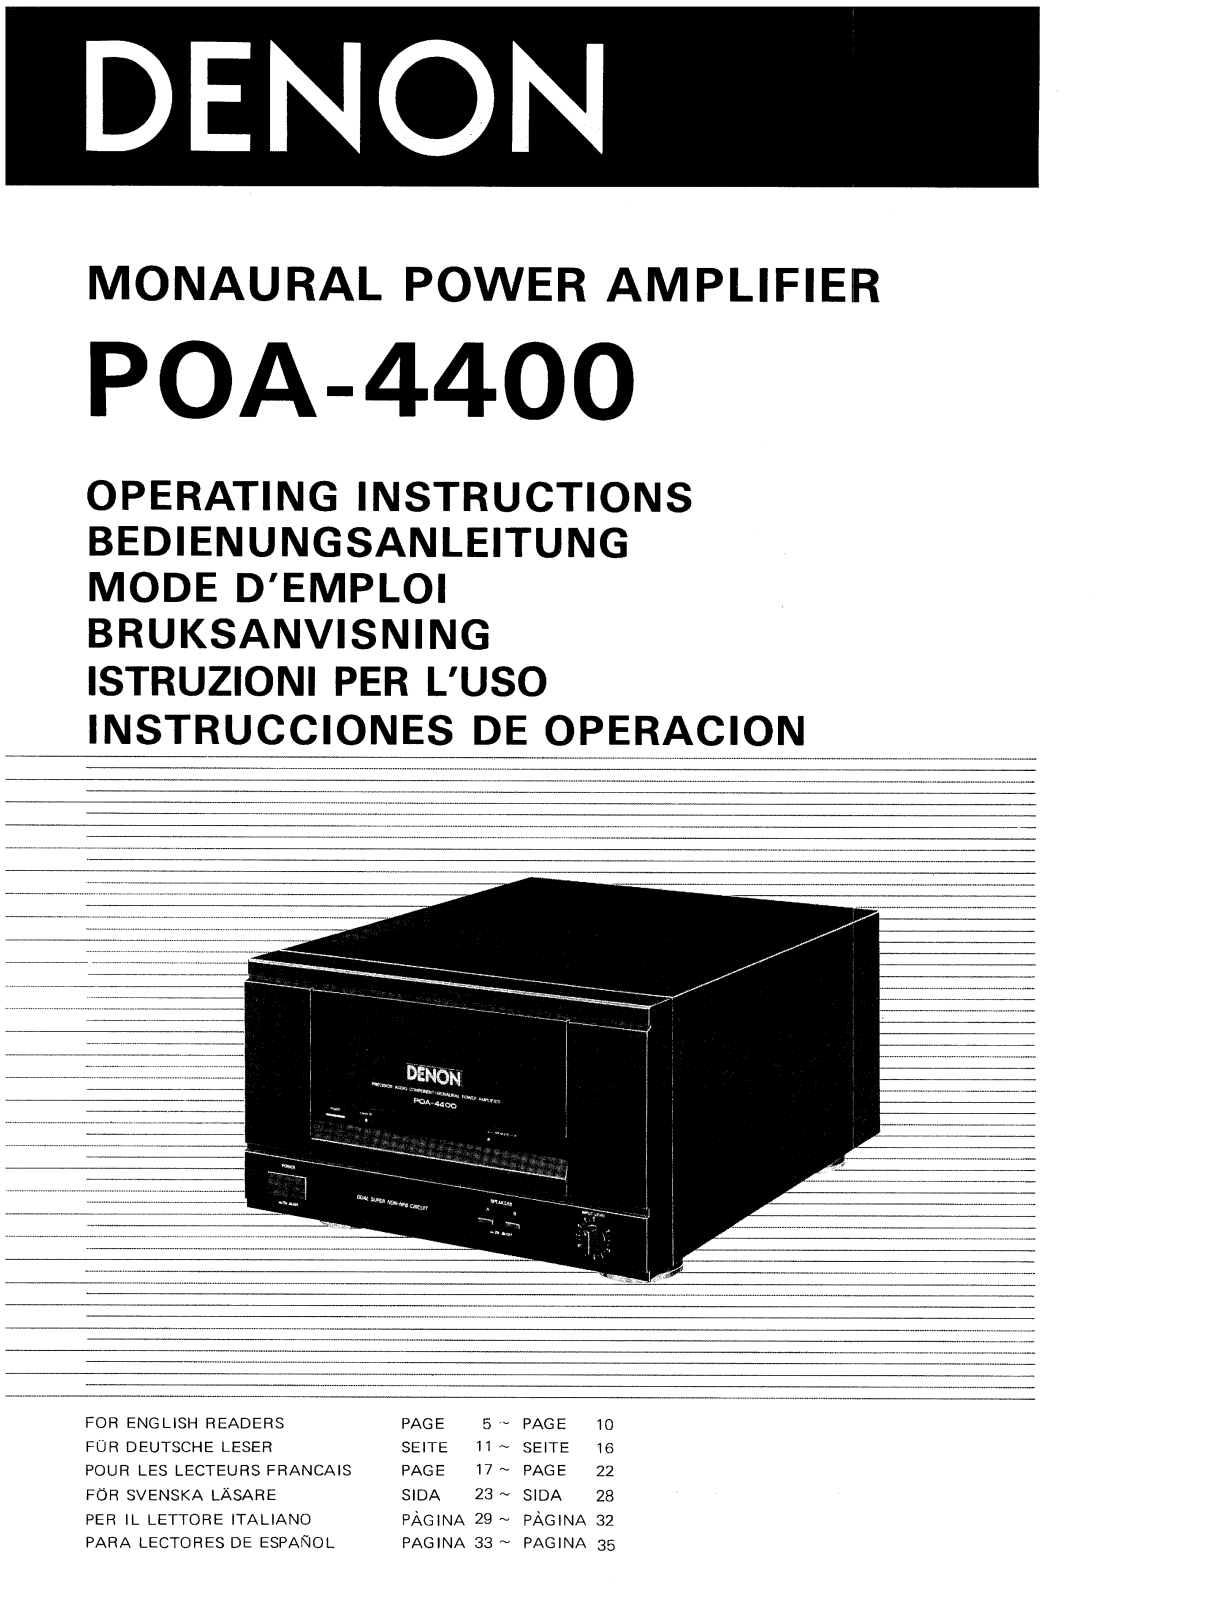 Denon POA-4400 Owner's Manual